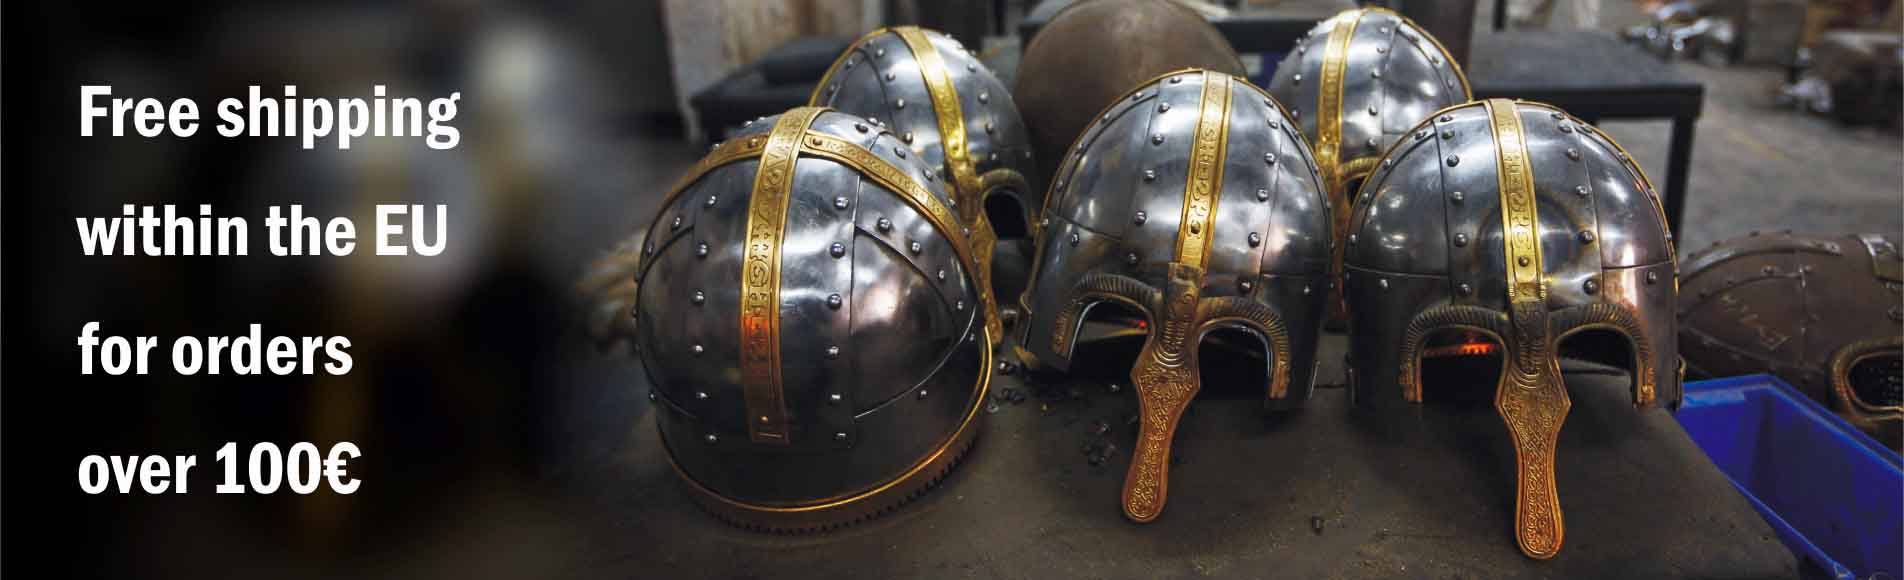 Medieval style helmets